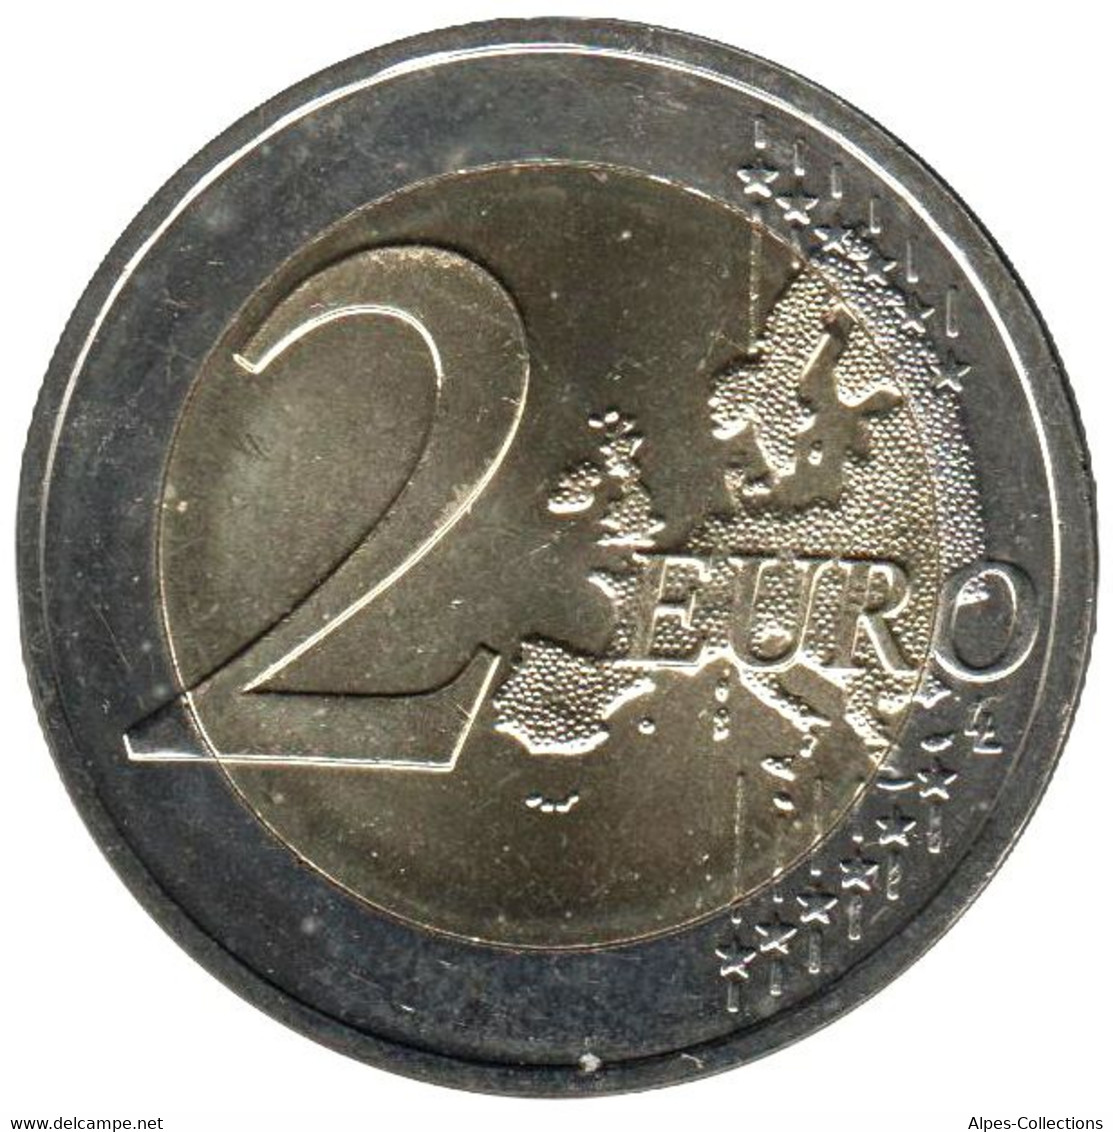 LI20019.1 - LITUANIE - 2 Euros Comm. Les Sutartines Chansons Lituaniennes - 2019 - Lithuania